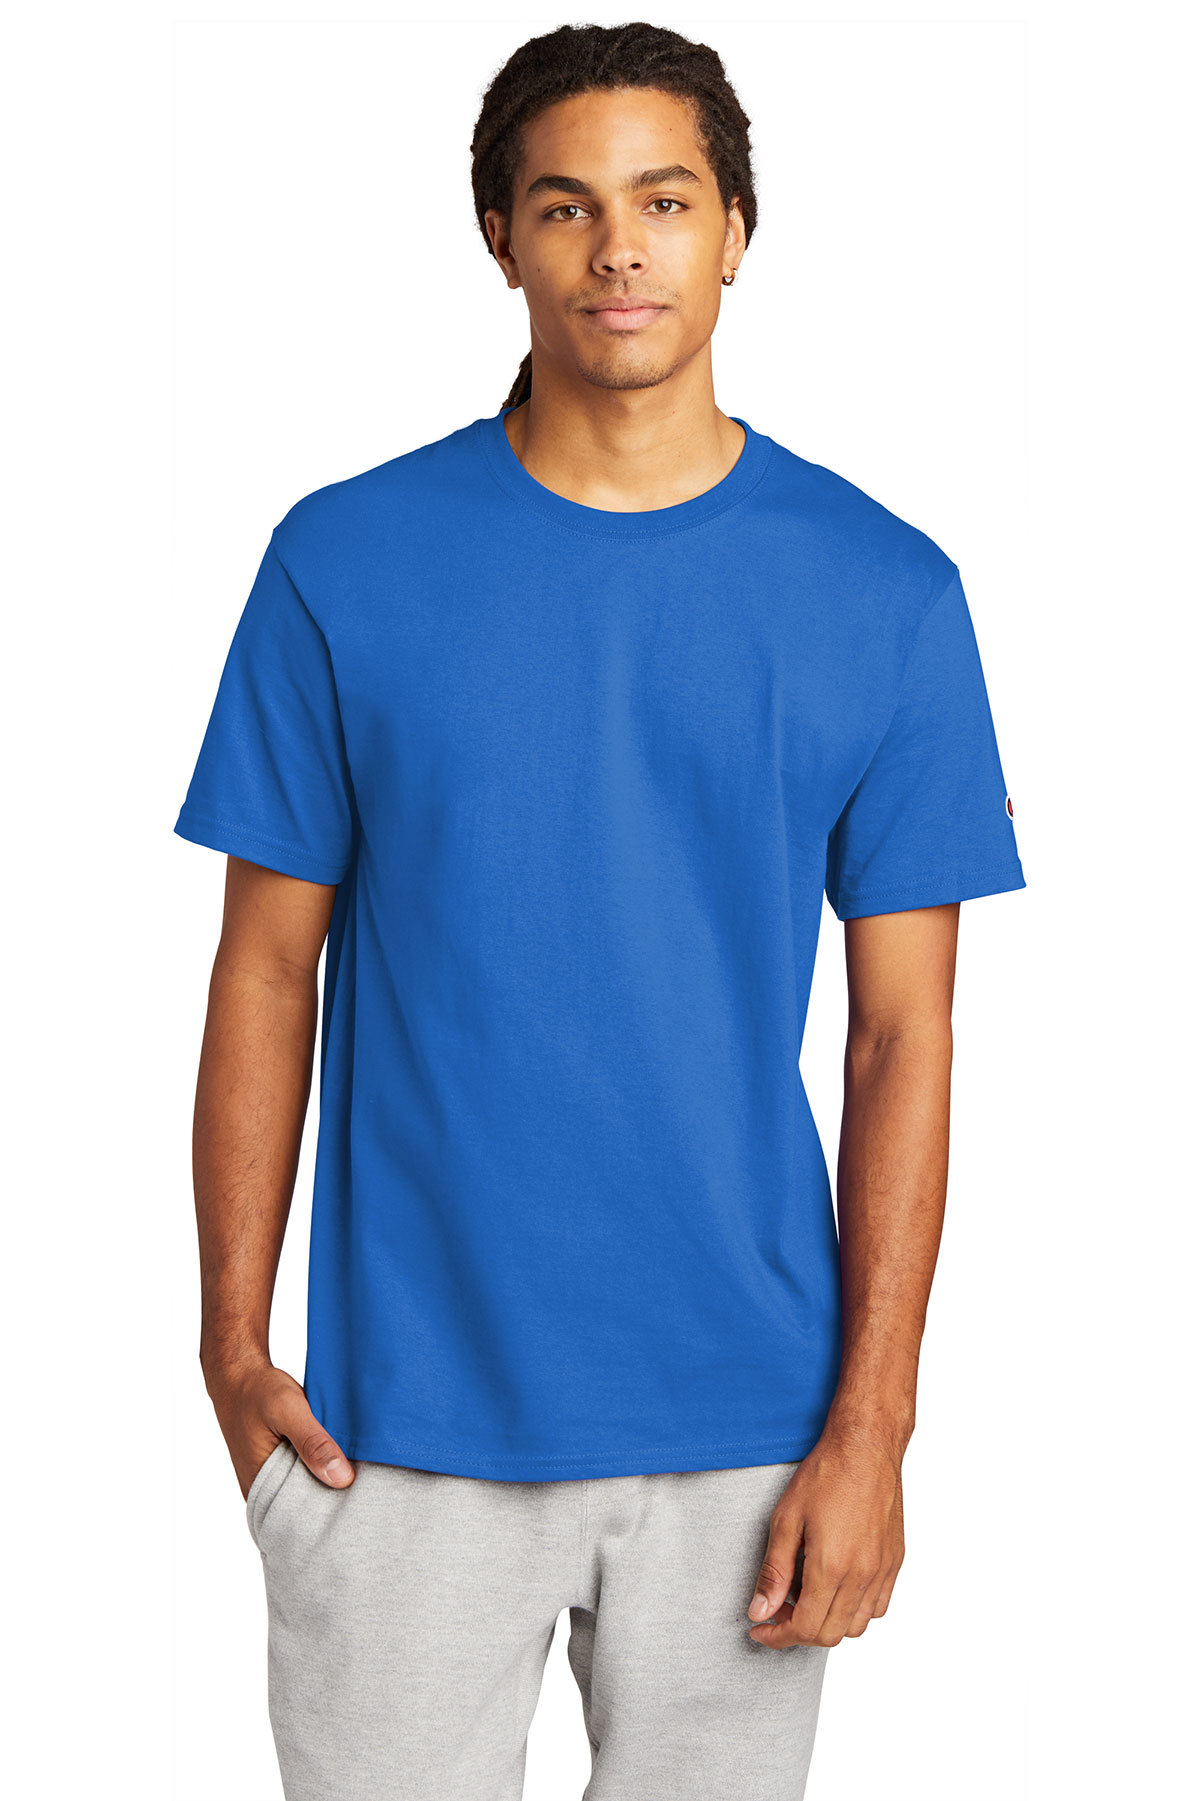 Champion T425 Short Sleeve Tagless T-Shirt $5.98 - T-Shirts